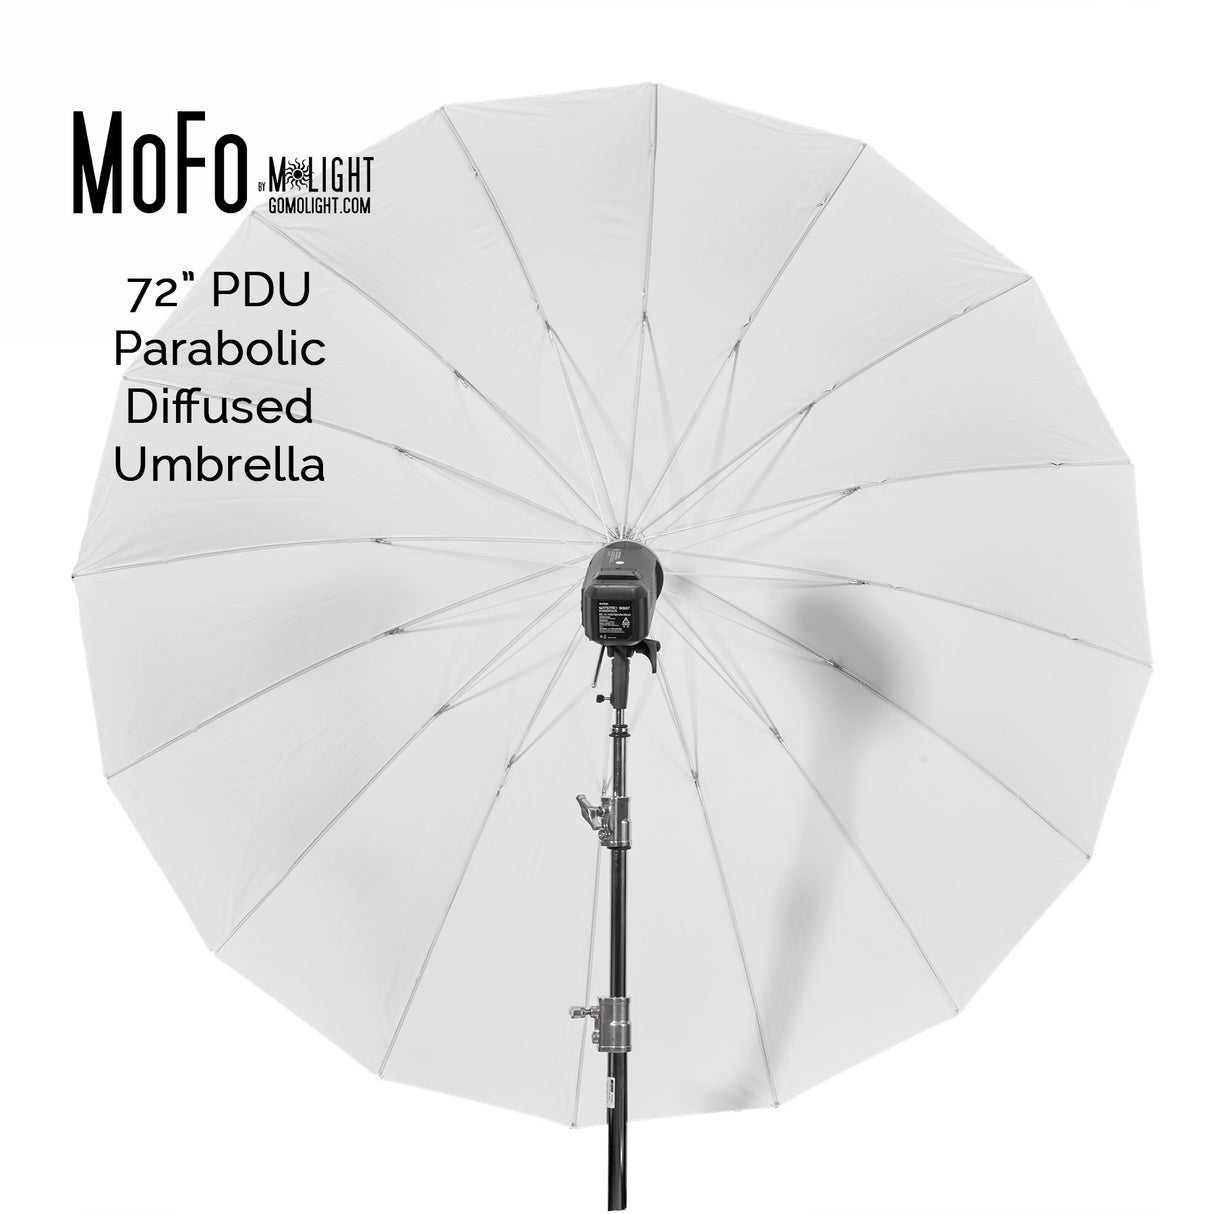 MoFo 72" PDU - Parabolic Diffused Umbrella